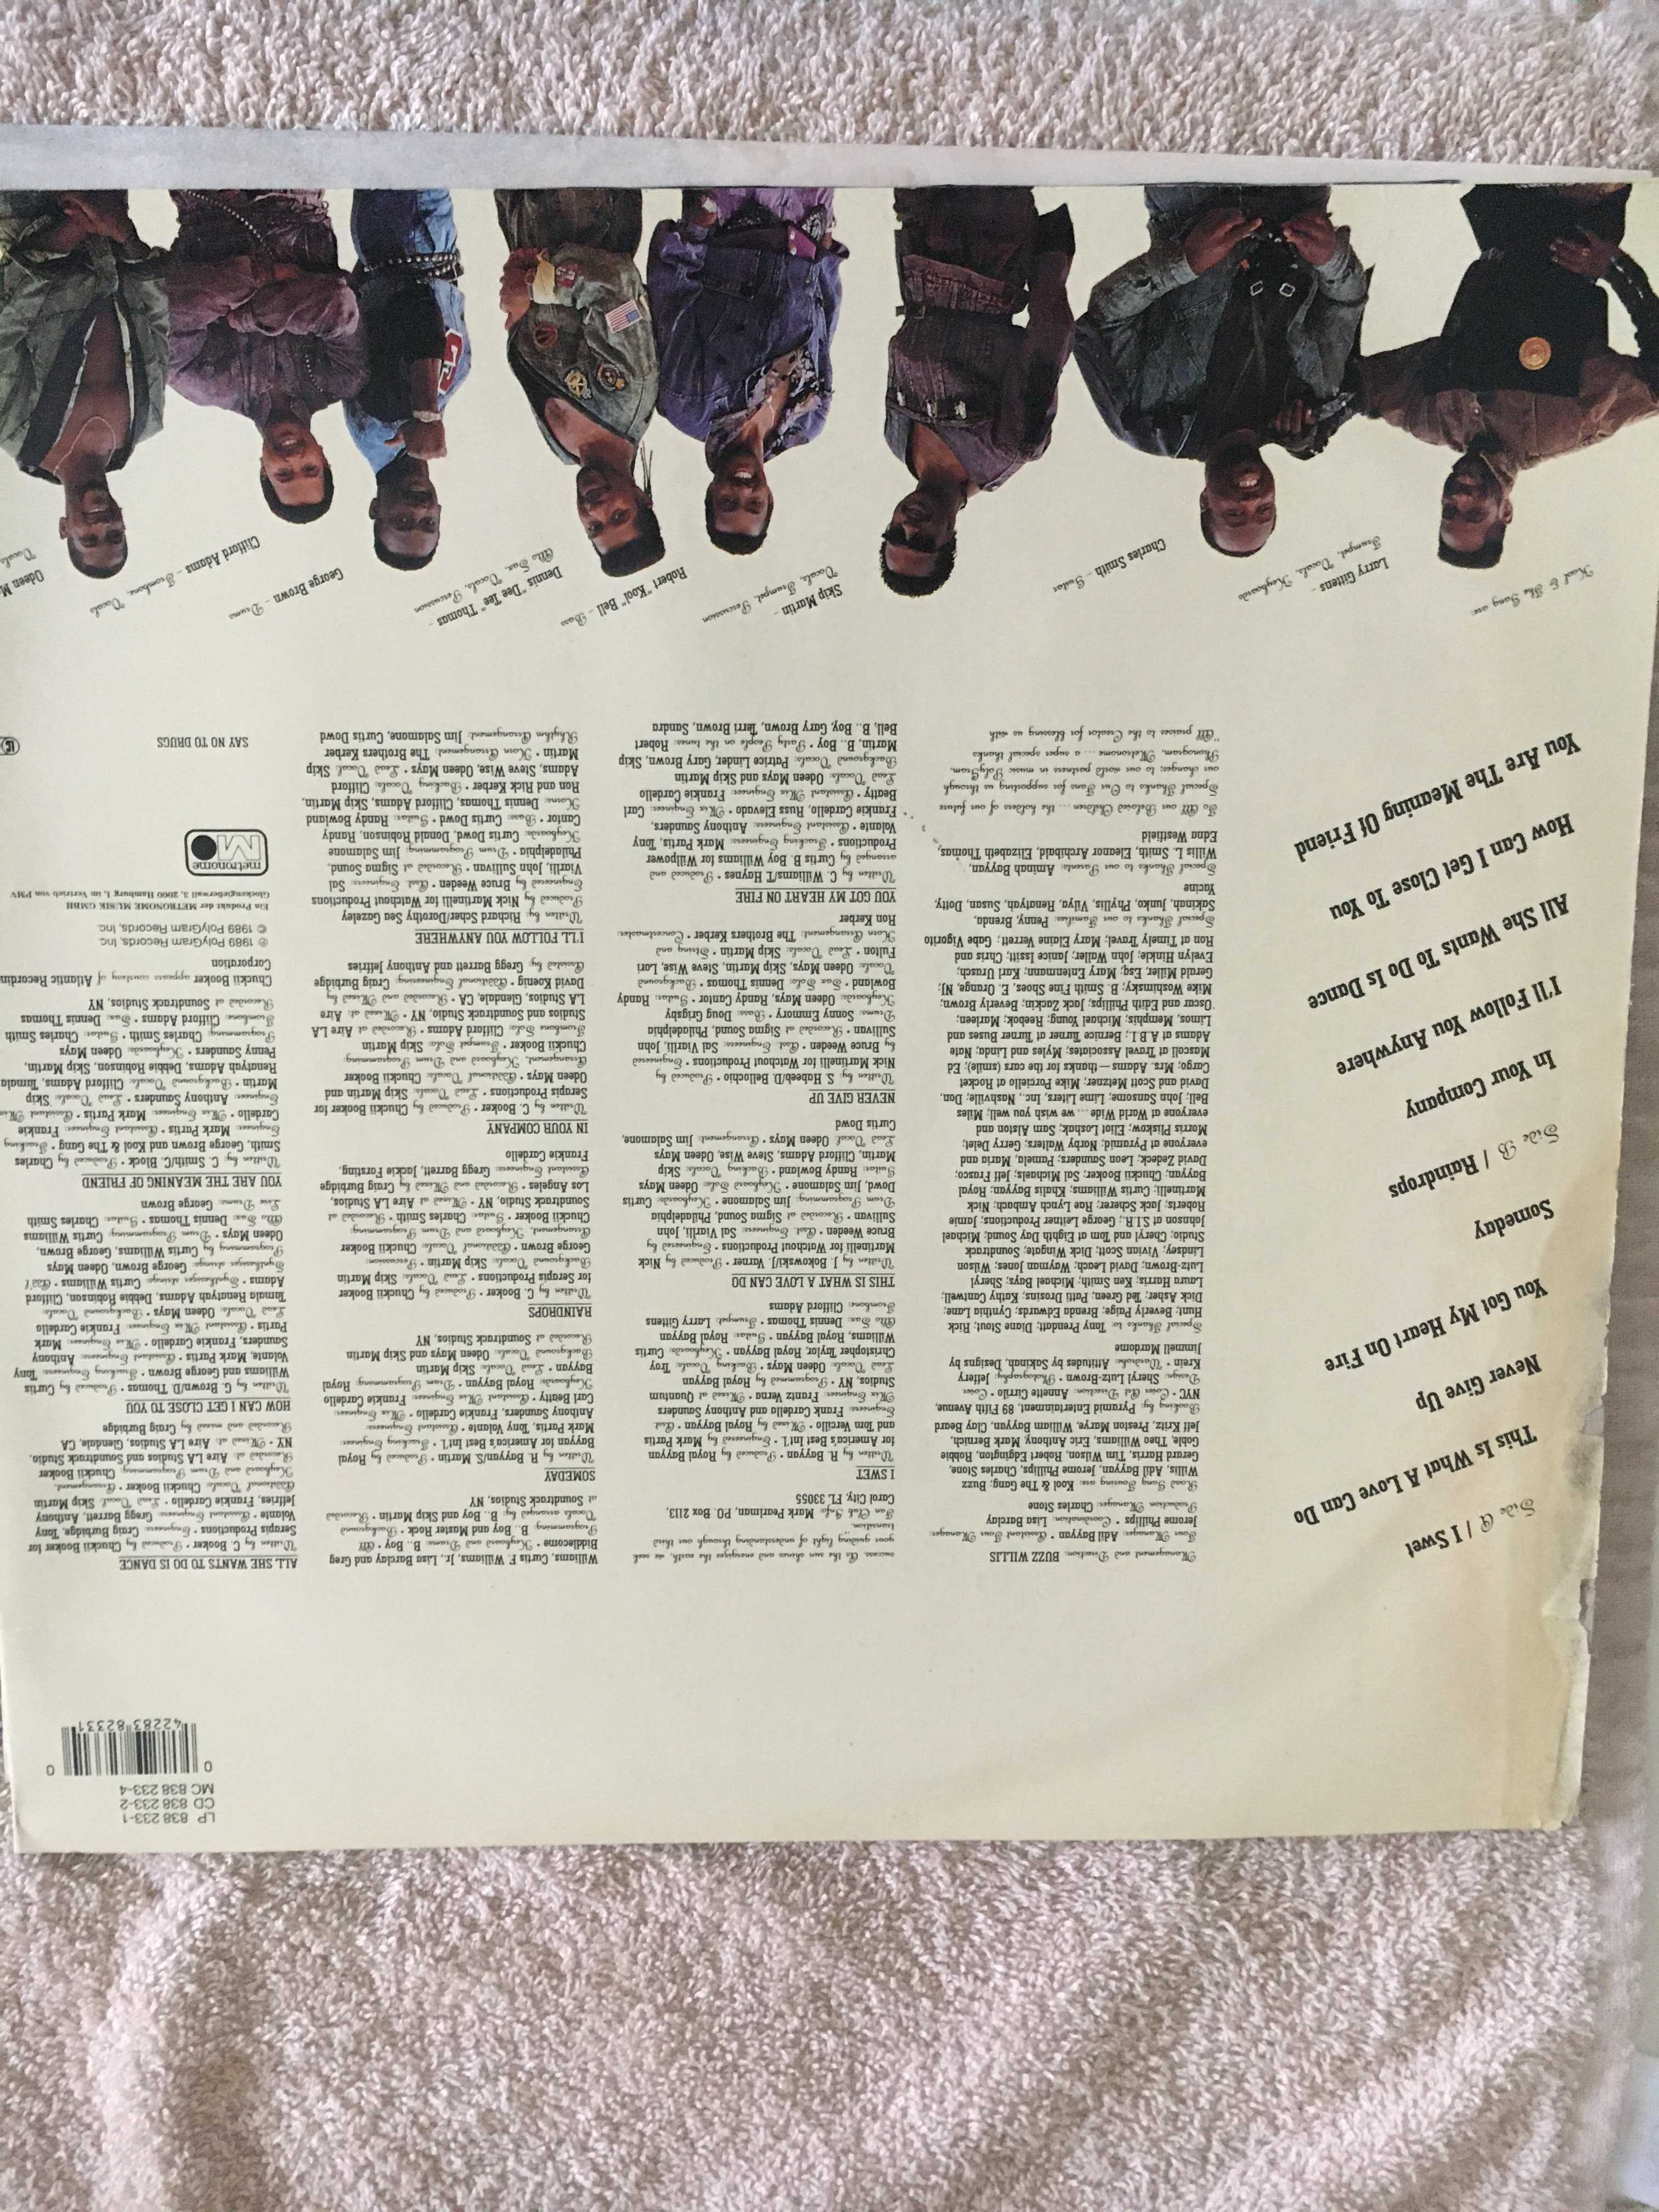 Sweat - Kool And the gang -LP 1989r.